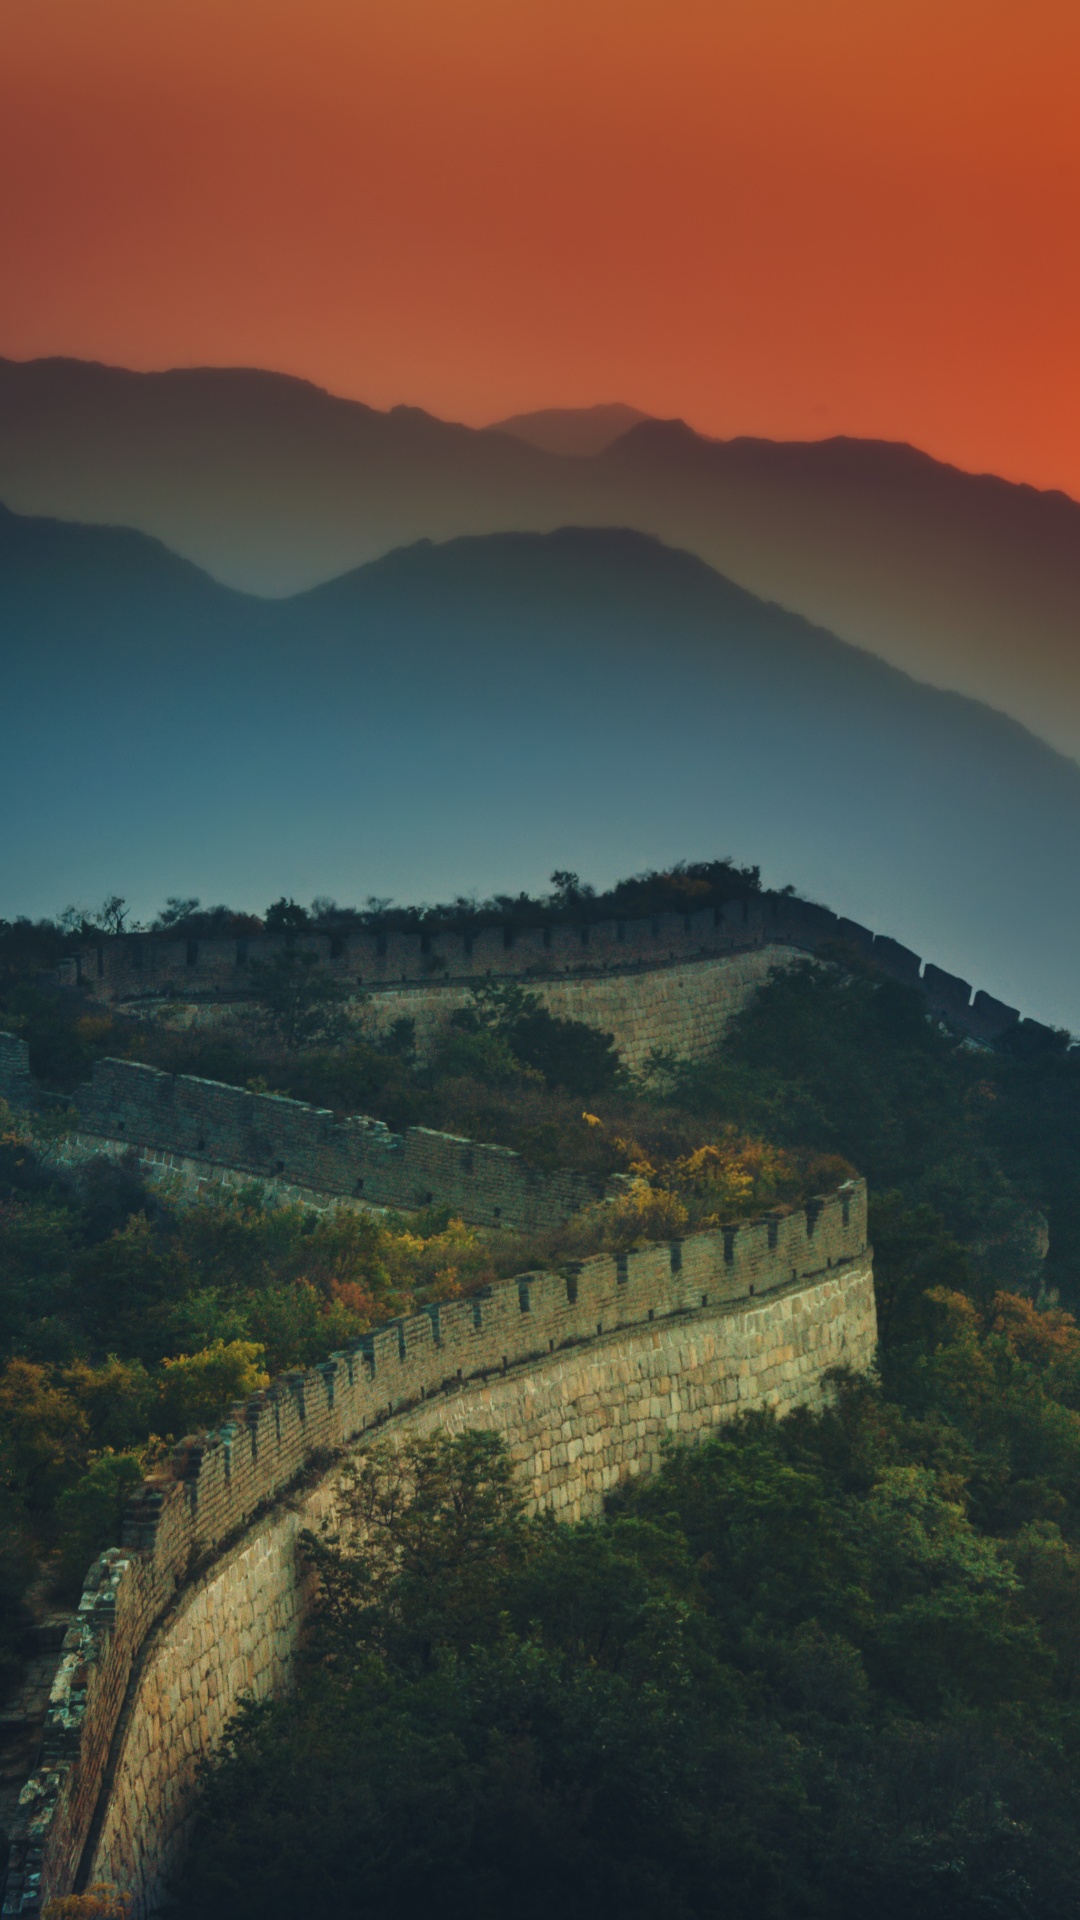 Great Wall of China 4K Wallpaper, Sunset, Orange sky, Mountains